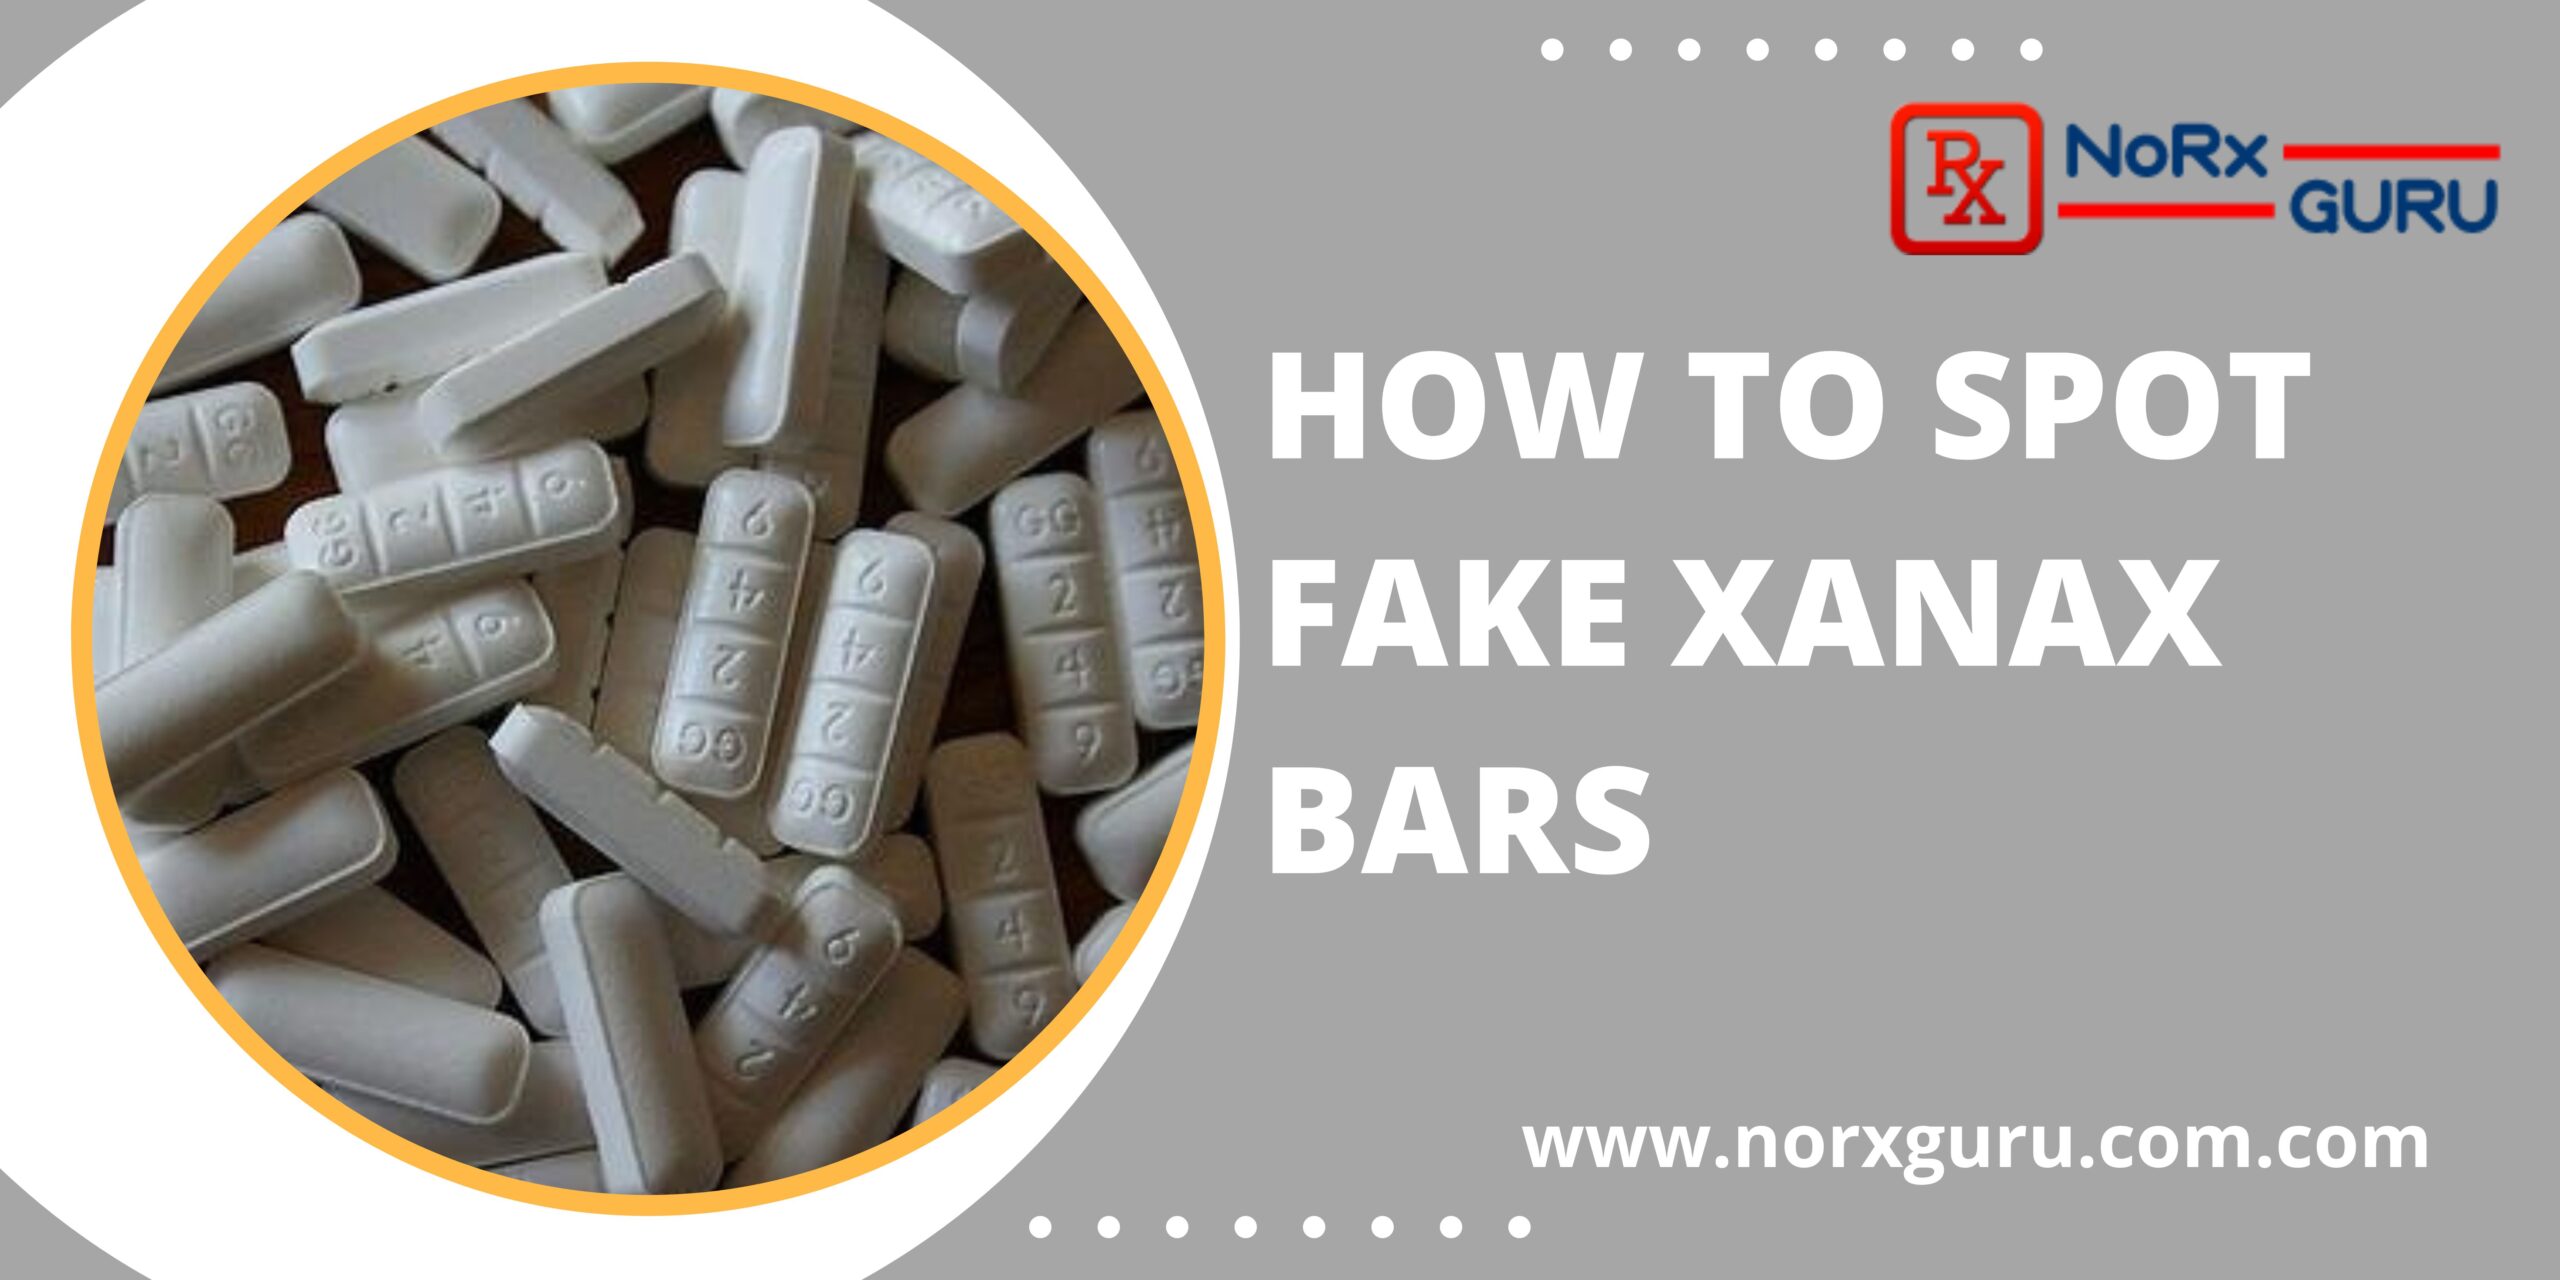 How to spot fake xanax bars